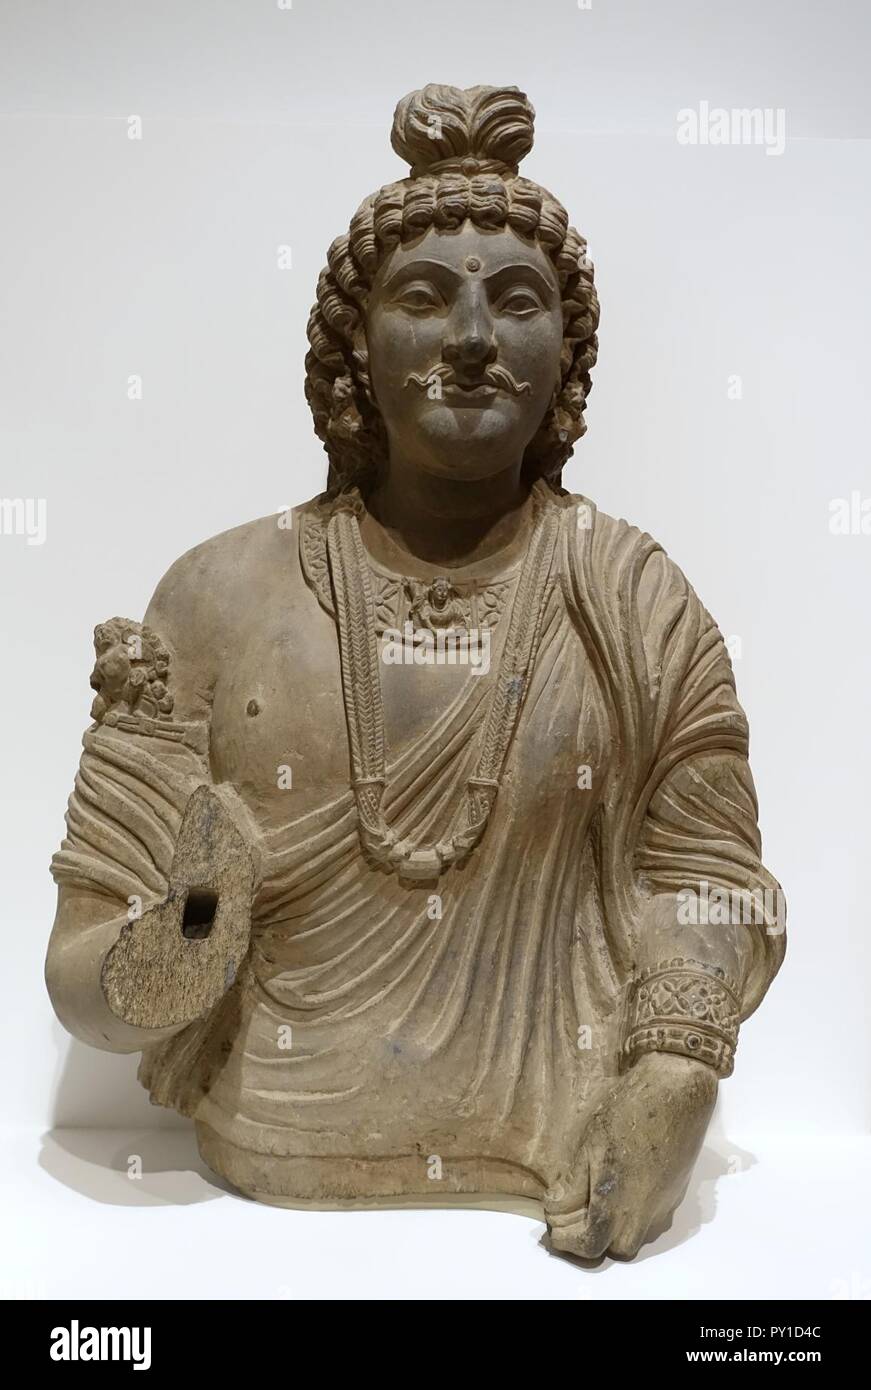 Bust of a bodhisattva, Gandharan region, Pakistan, Kushan empire, 100s-200s AD, gray schist - Stock Photo